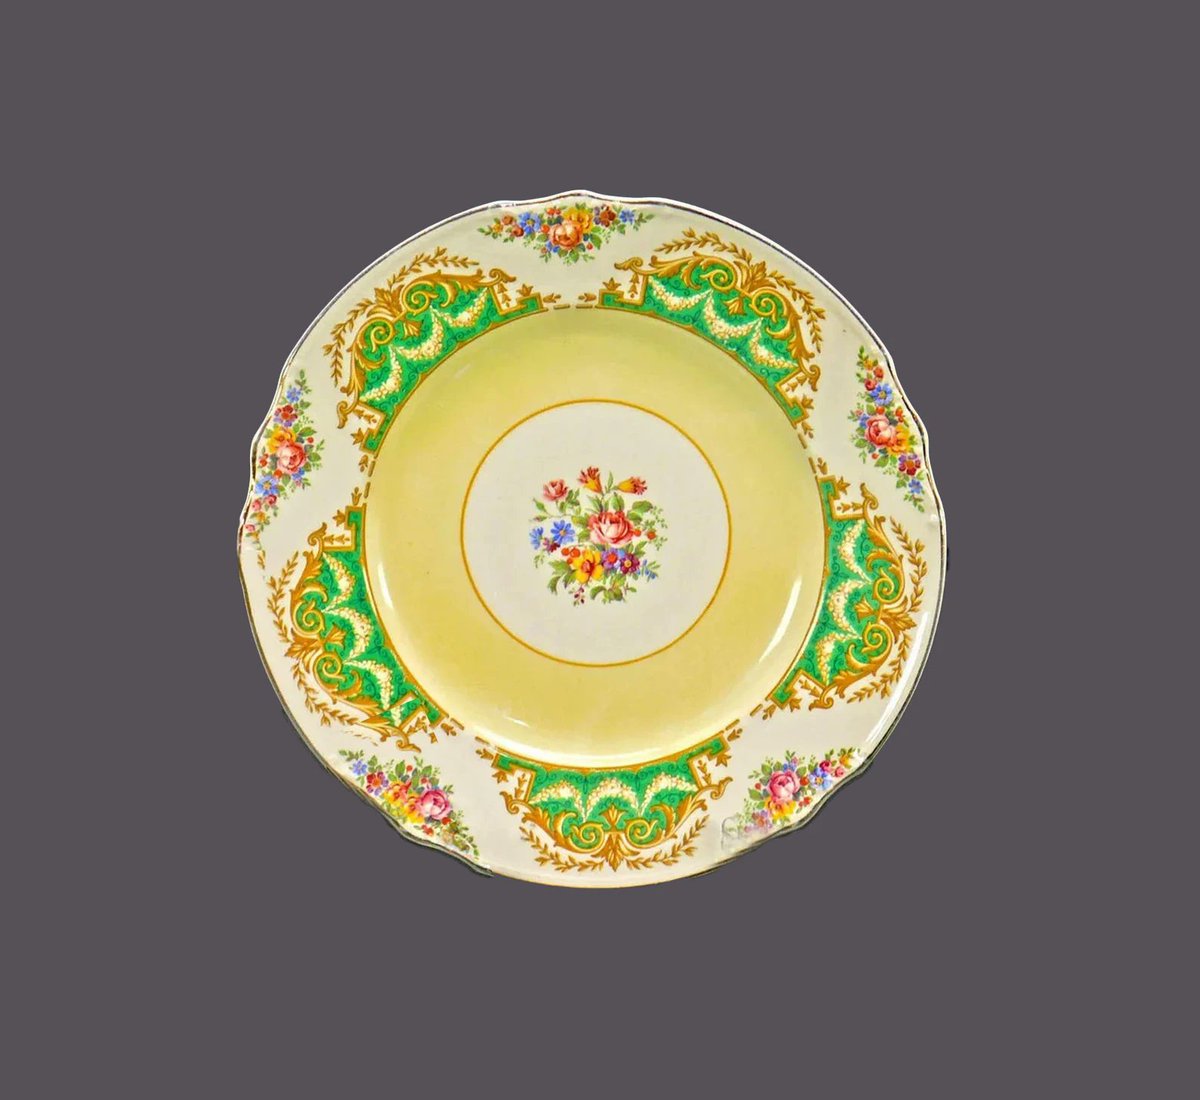 Antique art-nouveau J&G Meakin Ambassador luncheon plate made in England. etsy.me/3WH5QdB via @Etsy #BuyfromGroovy #antiqueshop #tabledecor #tableware #dinnerware #artnouveau #antiquedishes #JGMeakin #MeakinAmbassador #Ambassador #EtsySellers